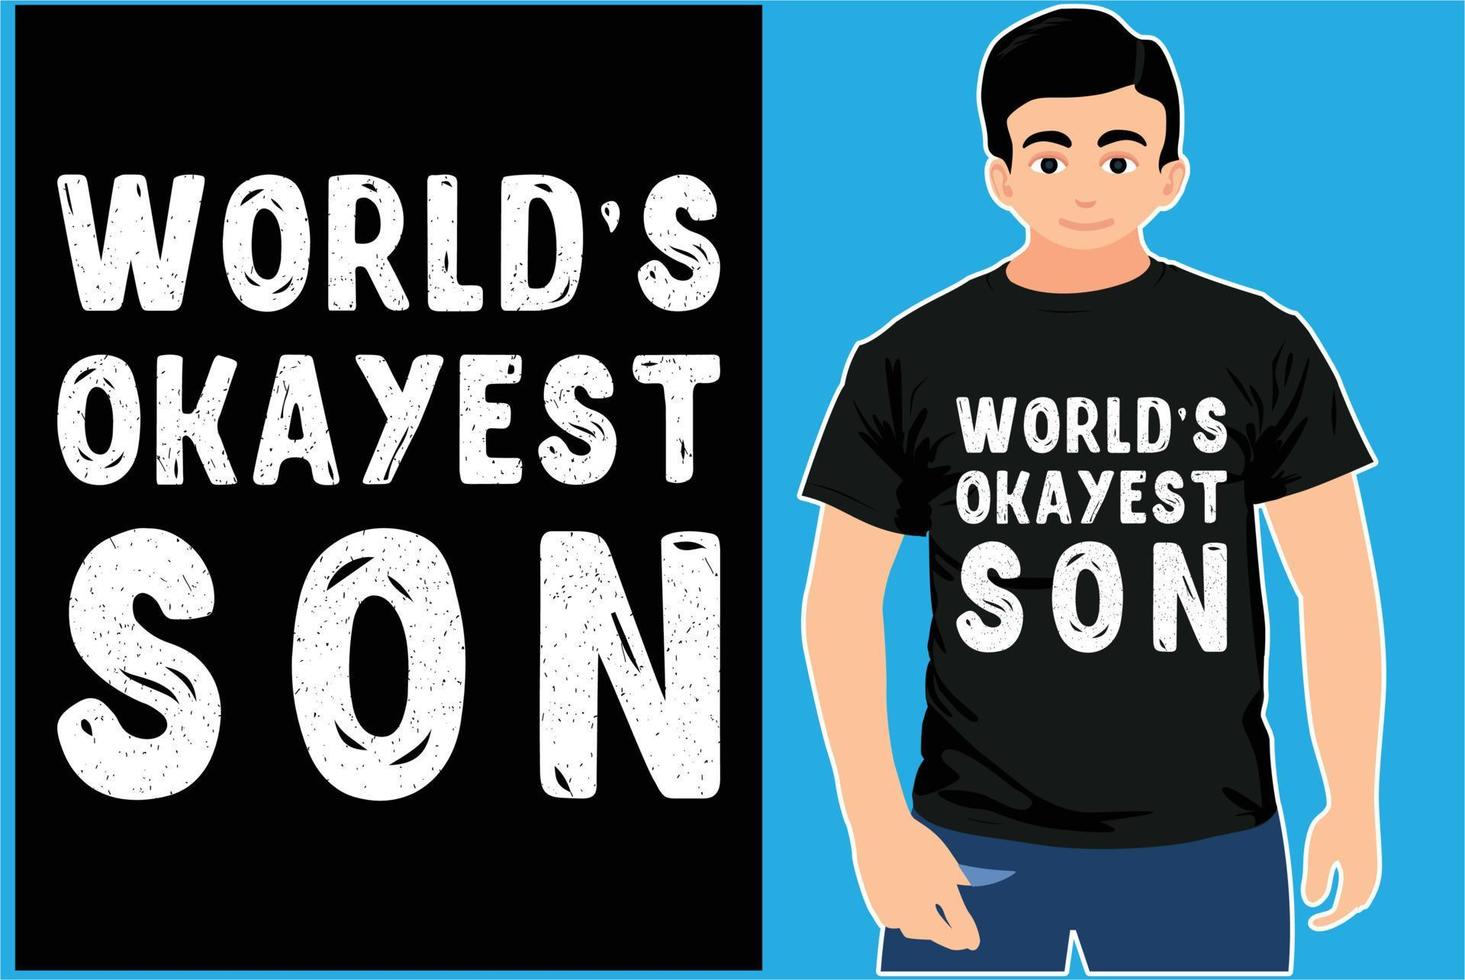 lustigstes Sohn-T - Shirtdesign der Welt. vektor